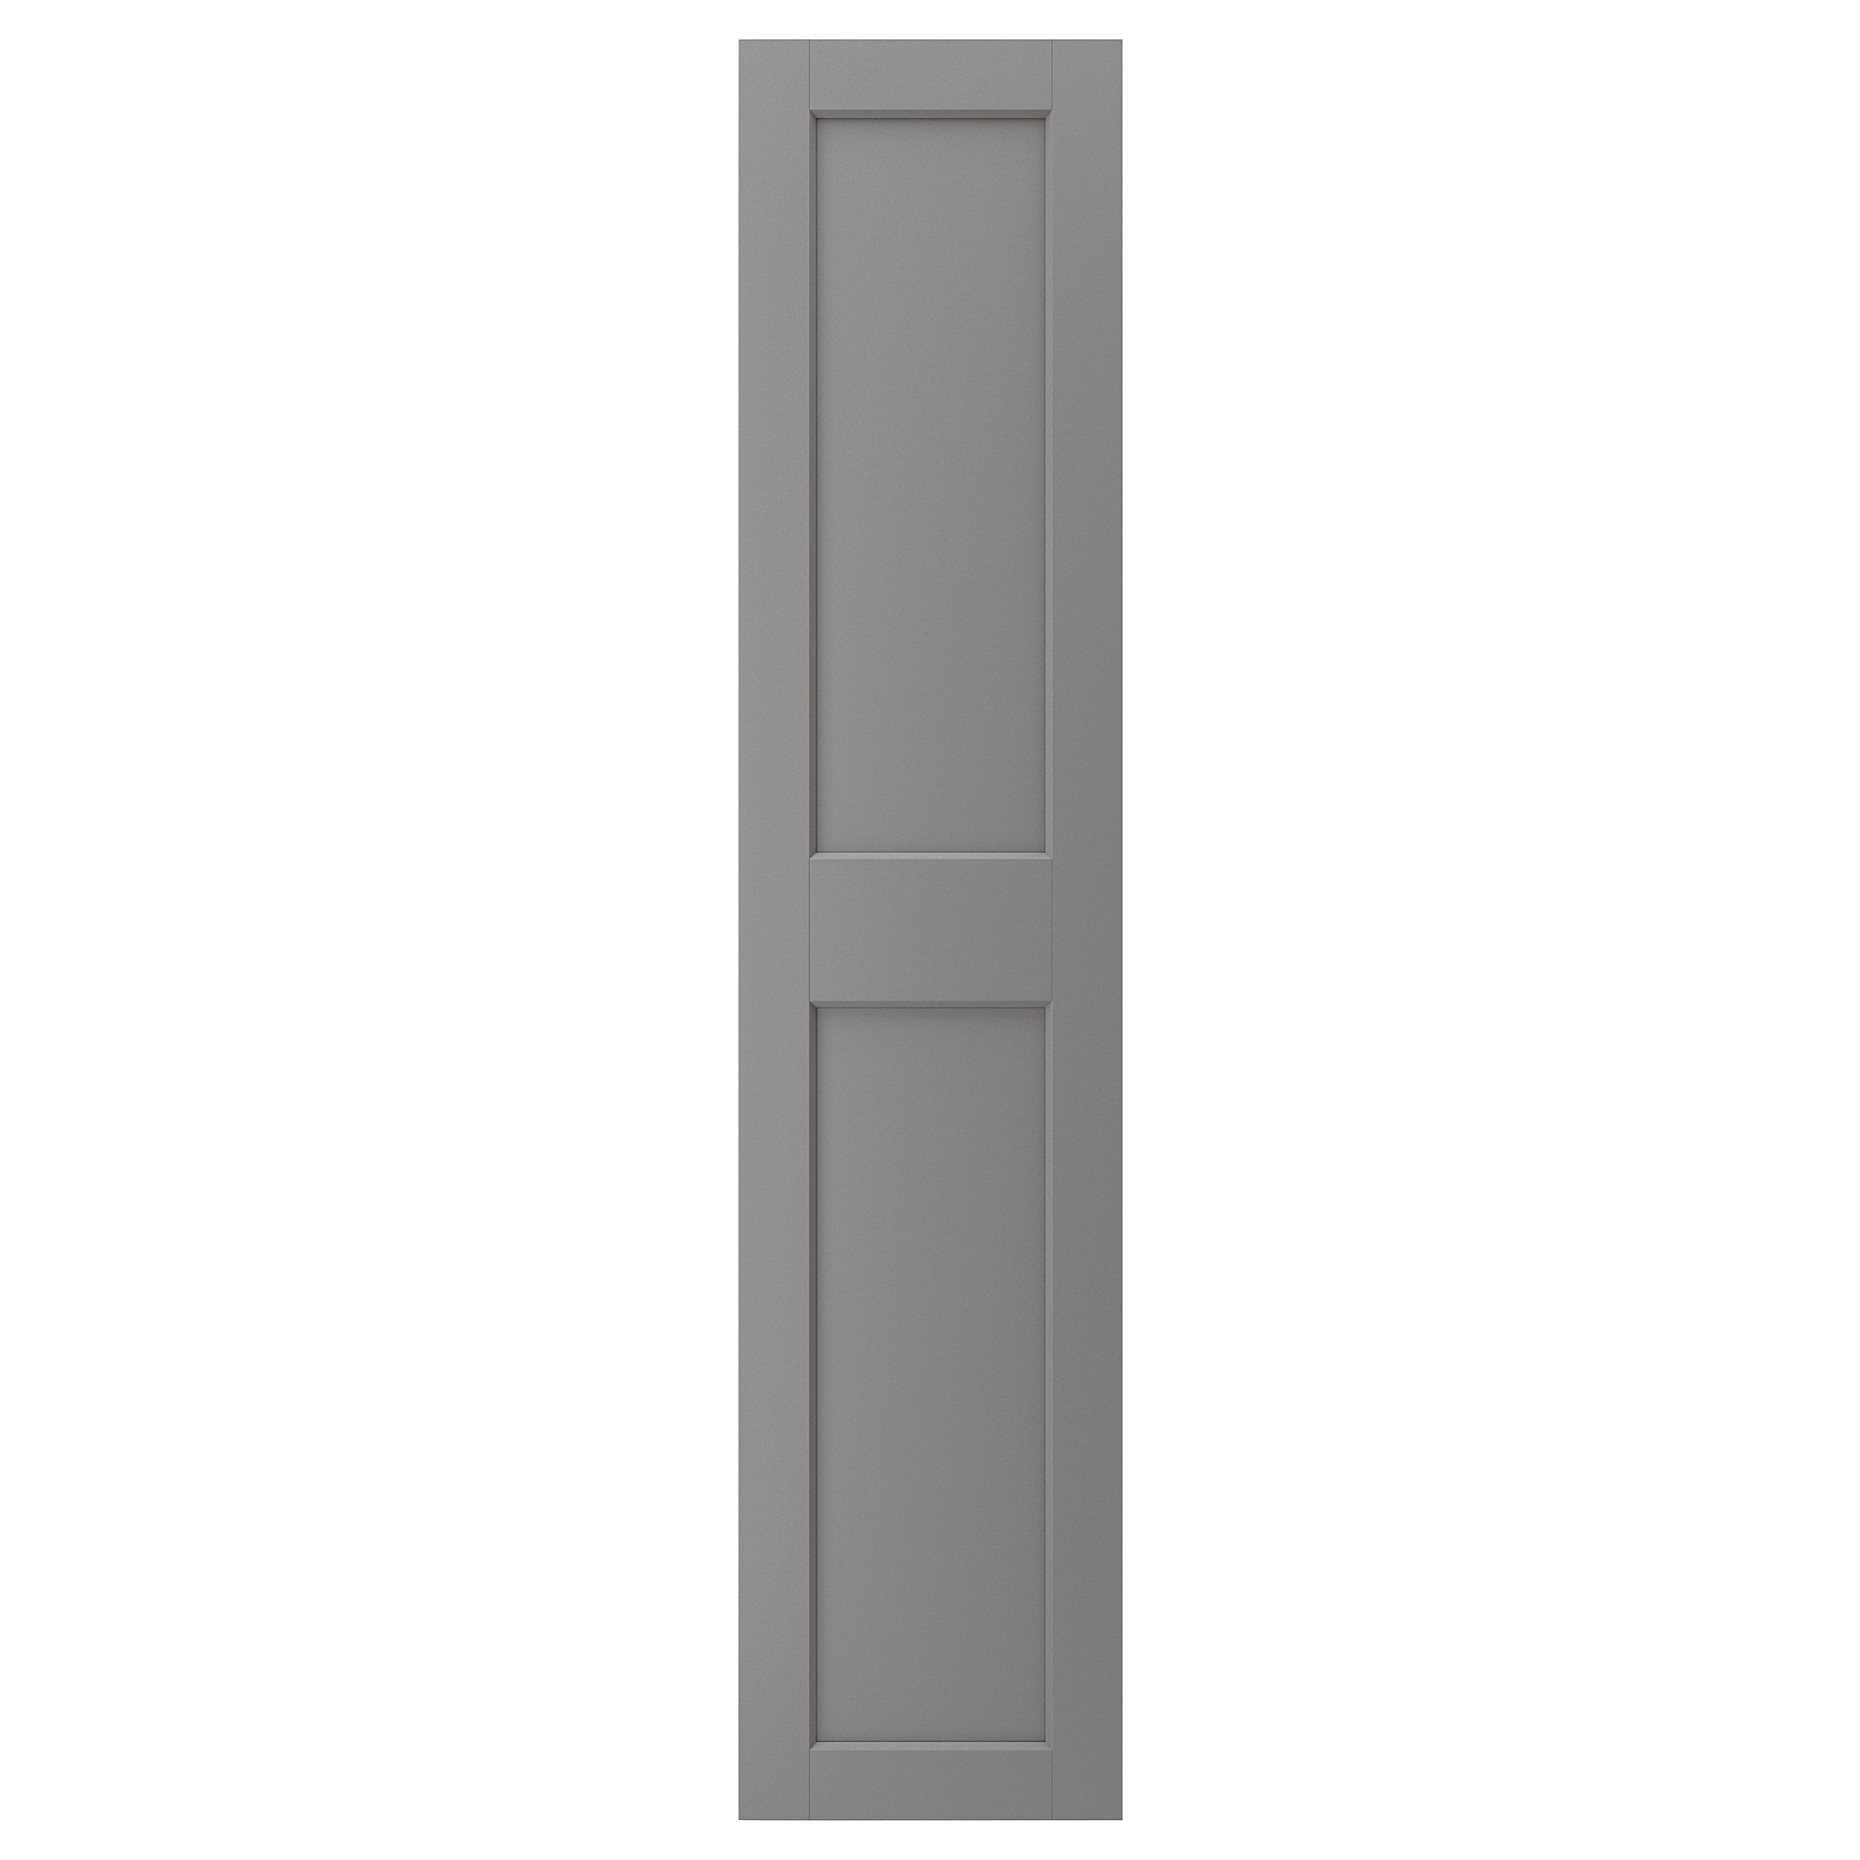 GRIMO, πόρτα με μεντεσέδες, 50x229 cm, 193.321.94